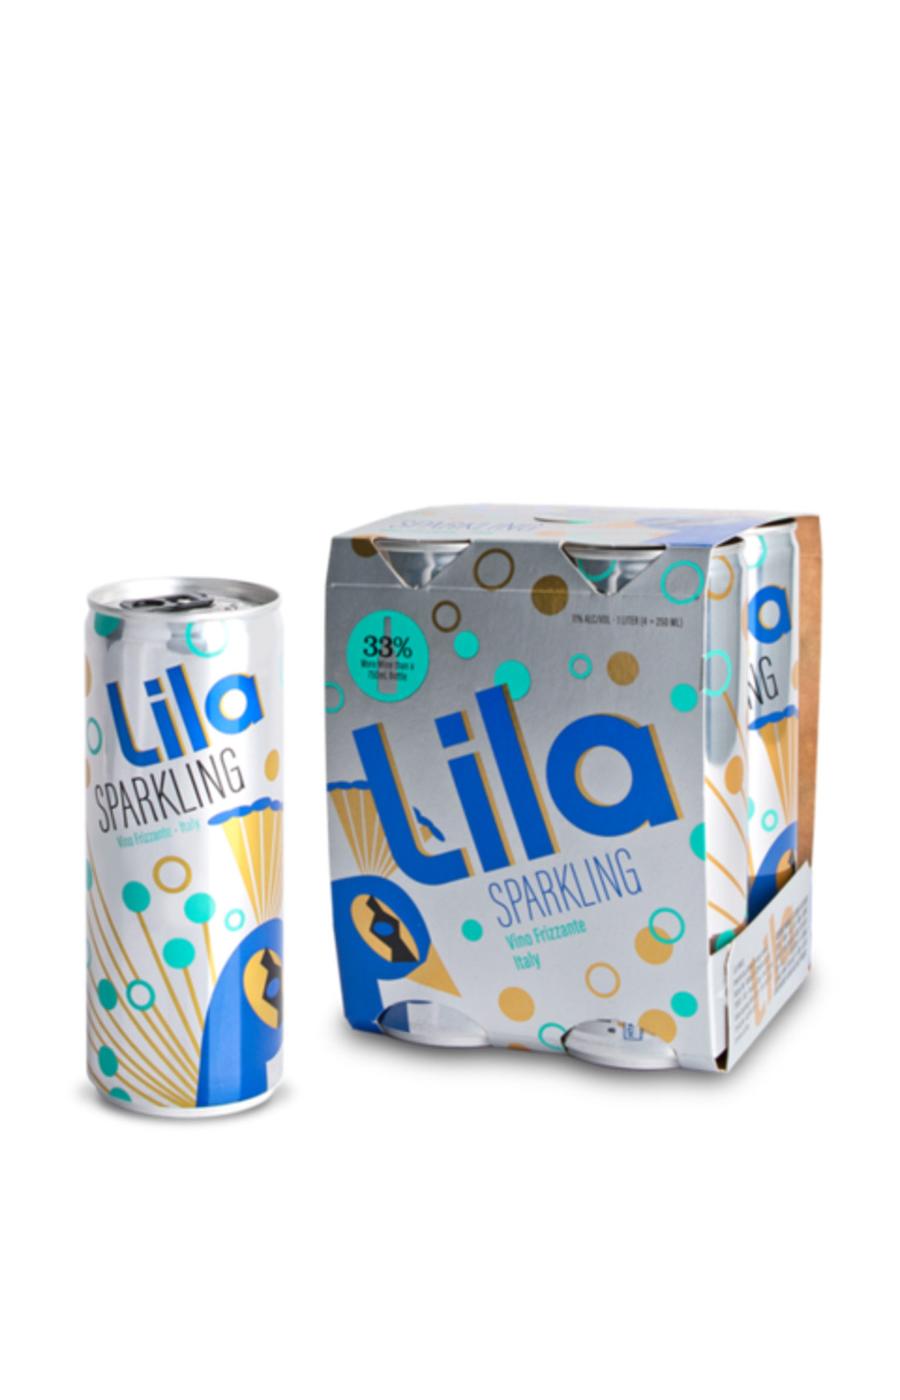 Lila Sparkling Vino Frizzante 250 mL Cans; image 1 of 2